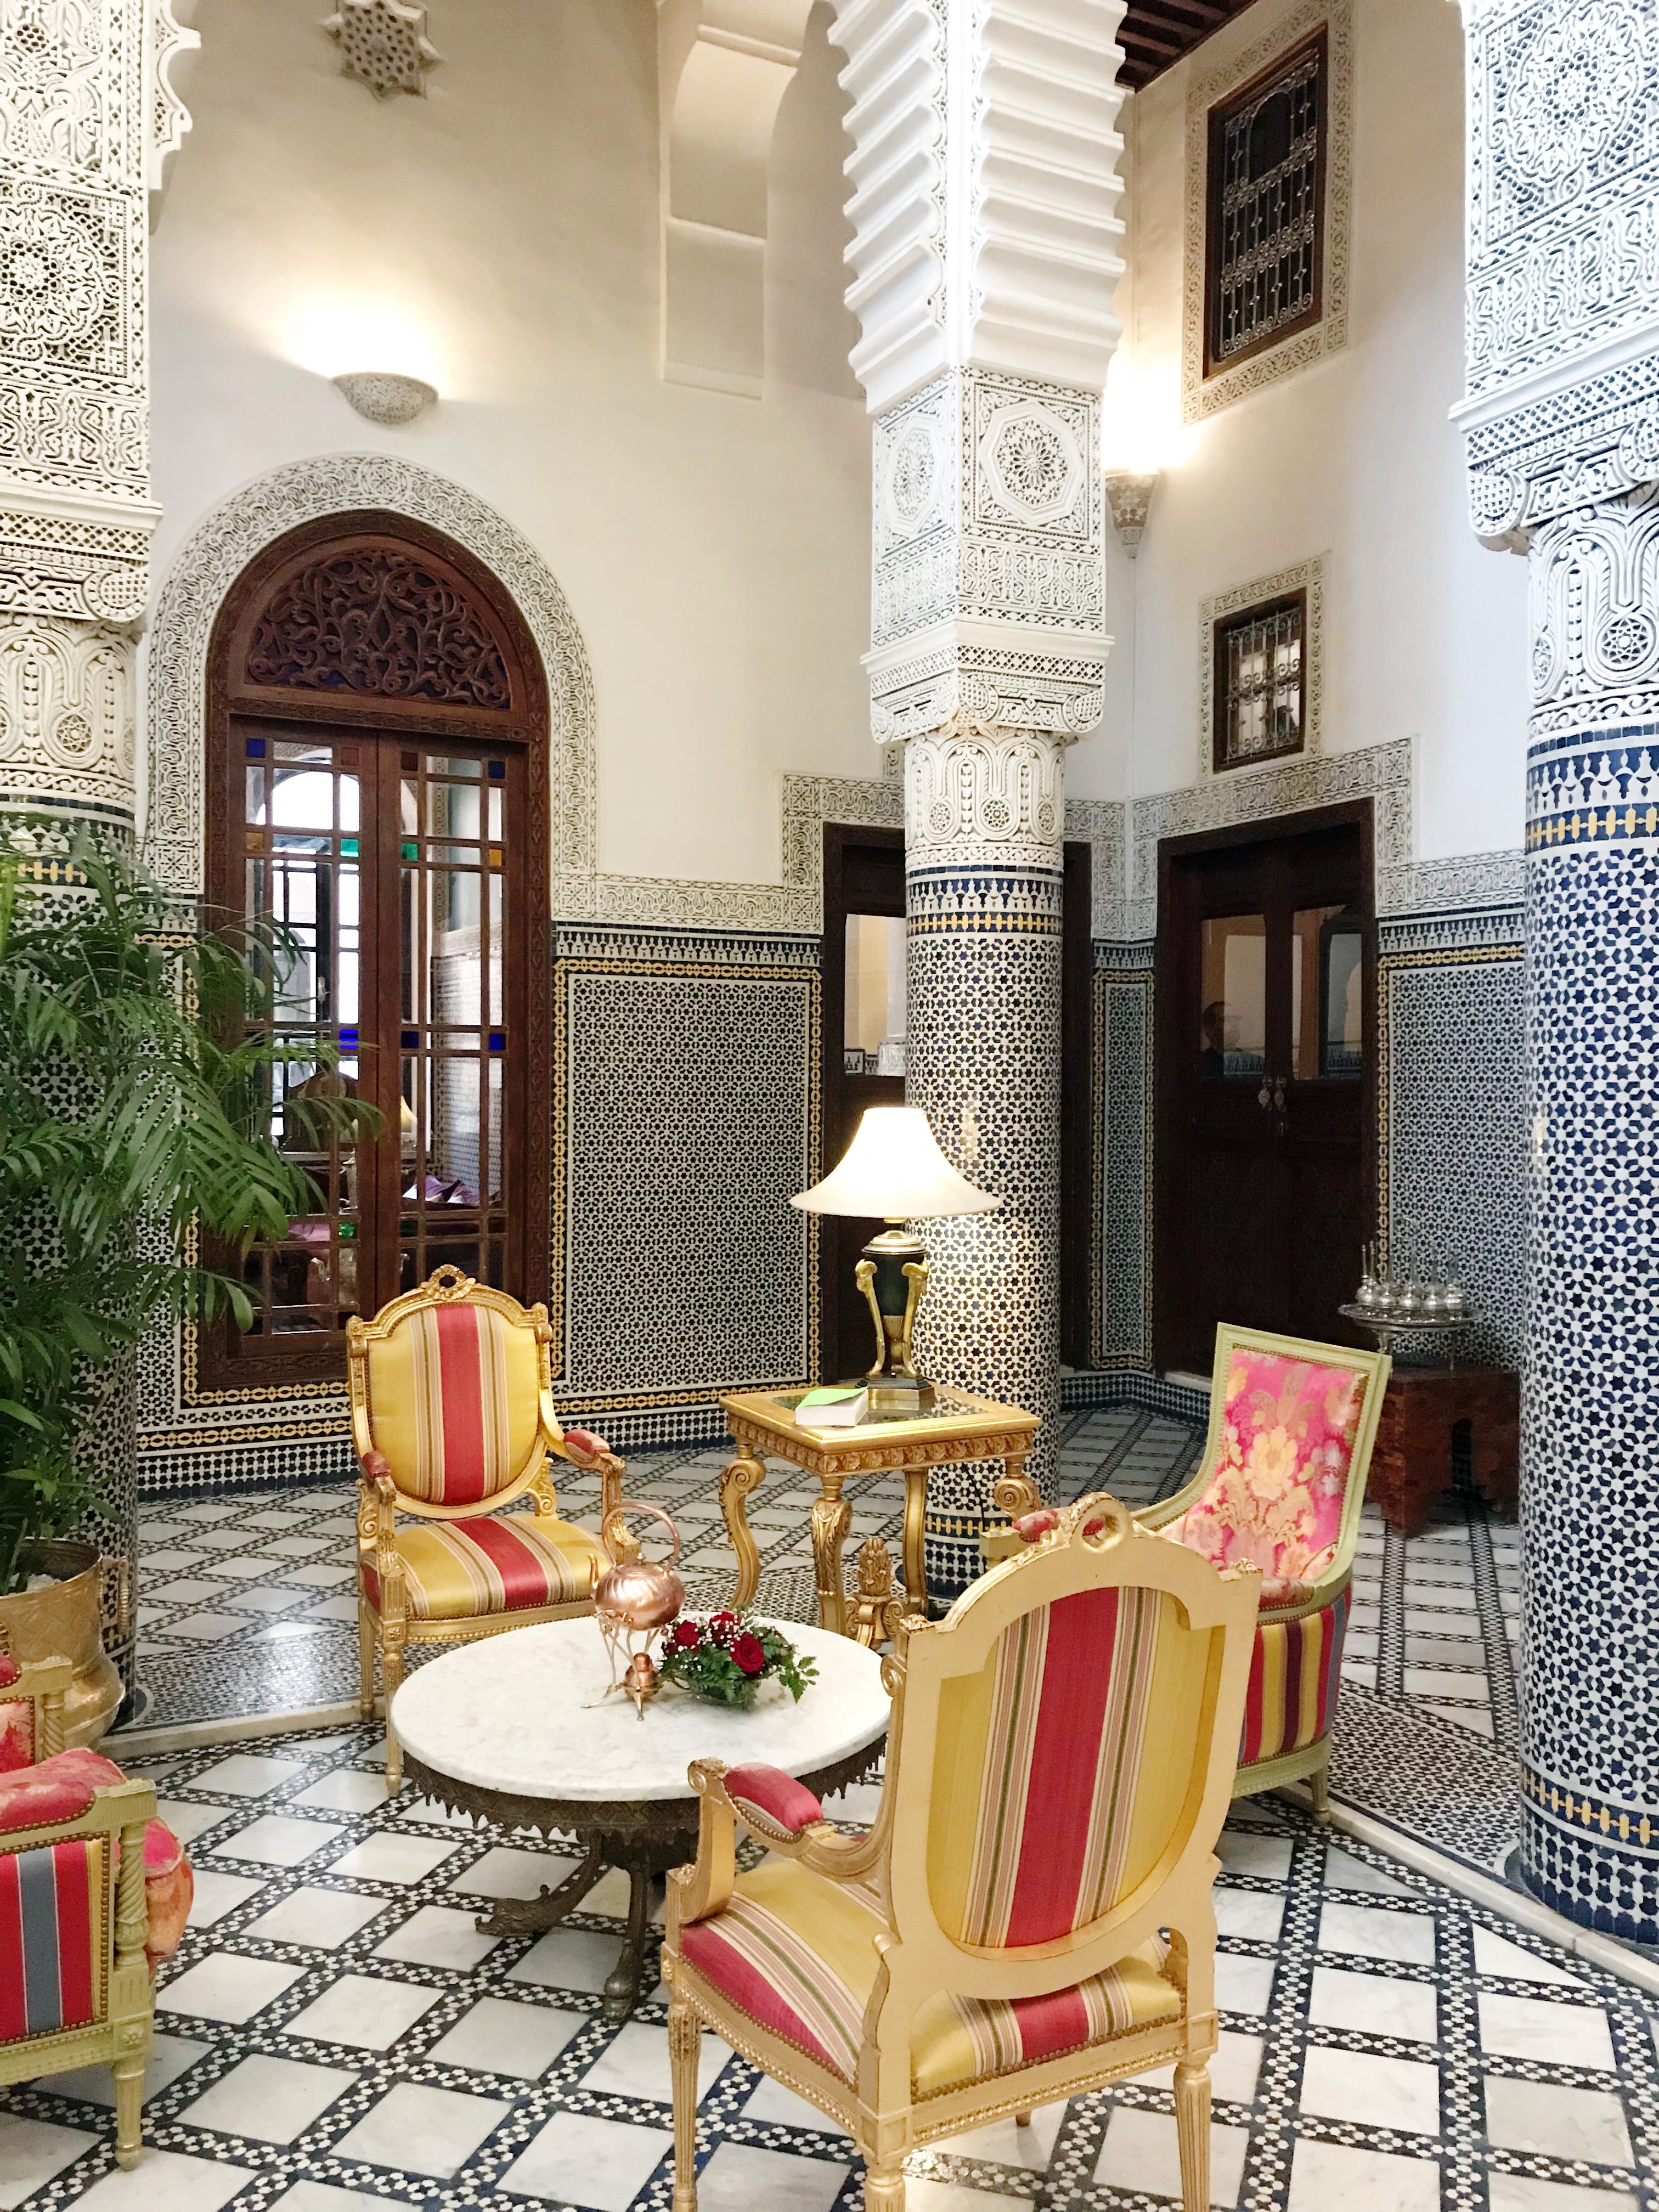 Our Stay At Riad Fes - Riad Fes Morocco - Riad Fez - Riad Fes Relais Chateaux - Fes Riad - Best Place To Stay In Fes - Fez Morocco - Hotels in Fes - Hotels in Fez - Morocco Hotel Review - #morocco #fes #travelblog